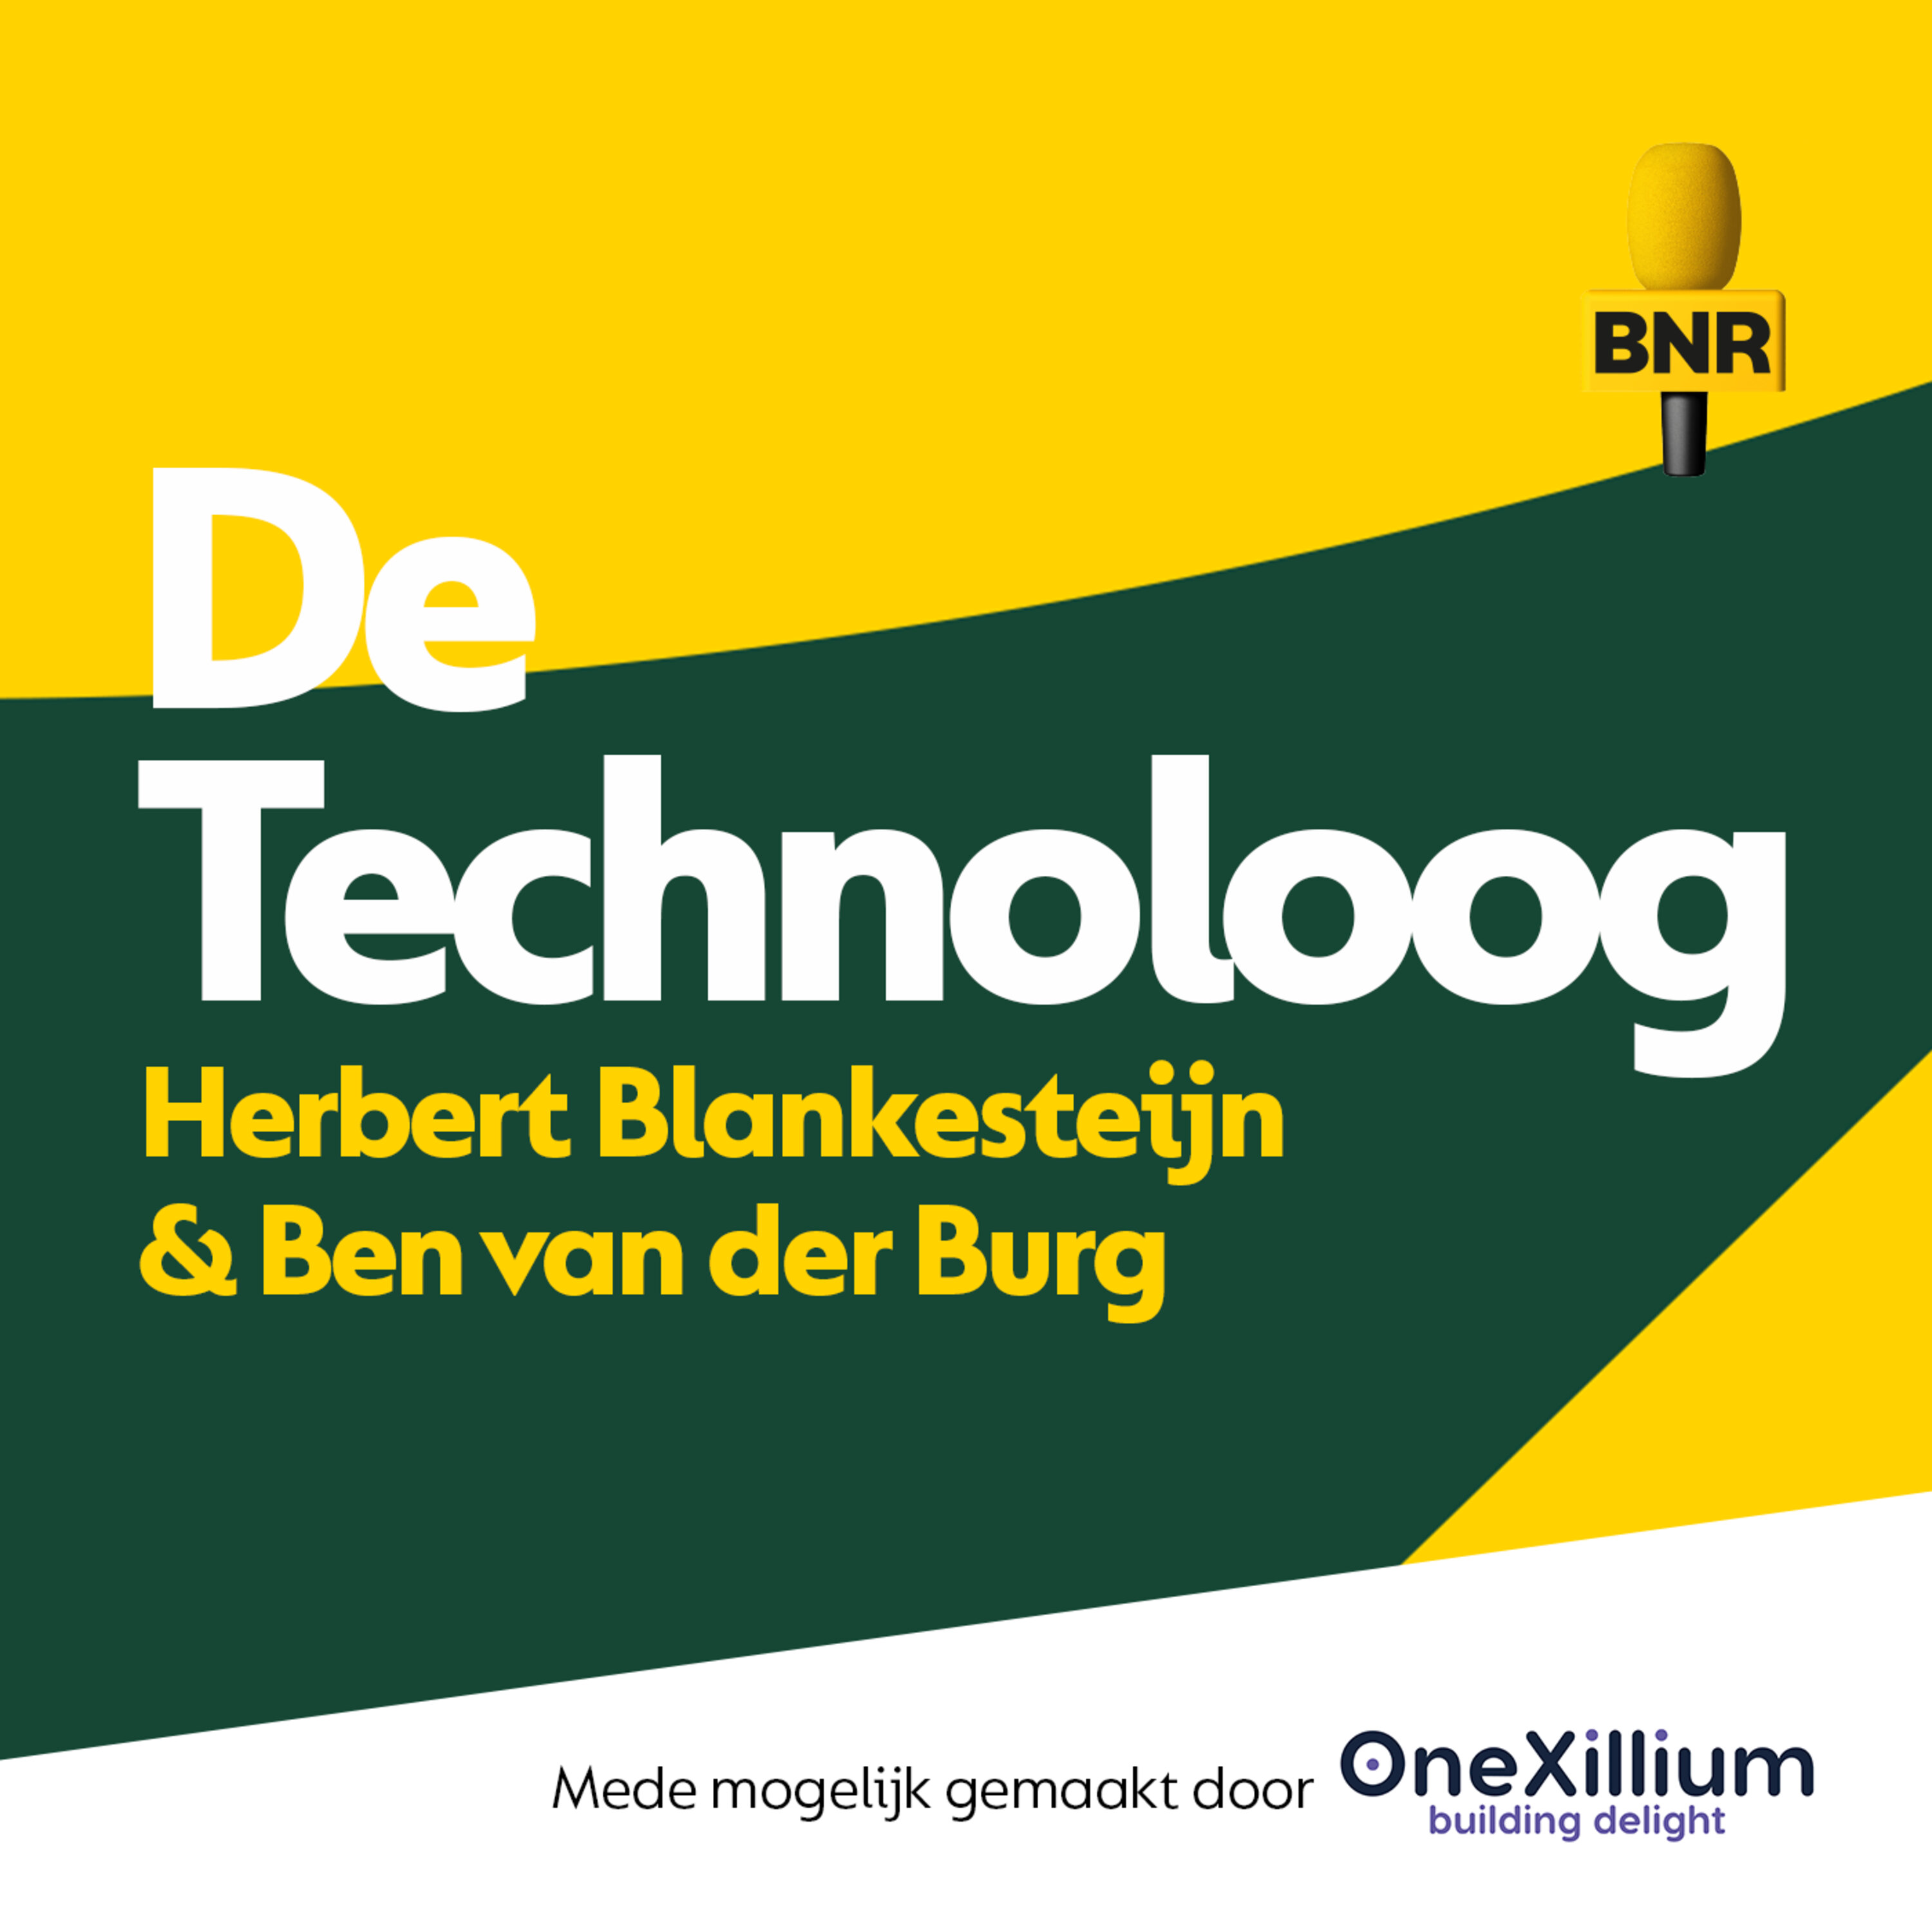 De Technoloog | BNR logo